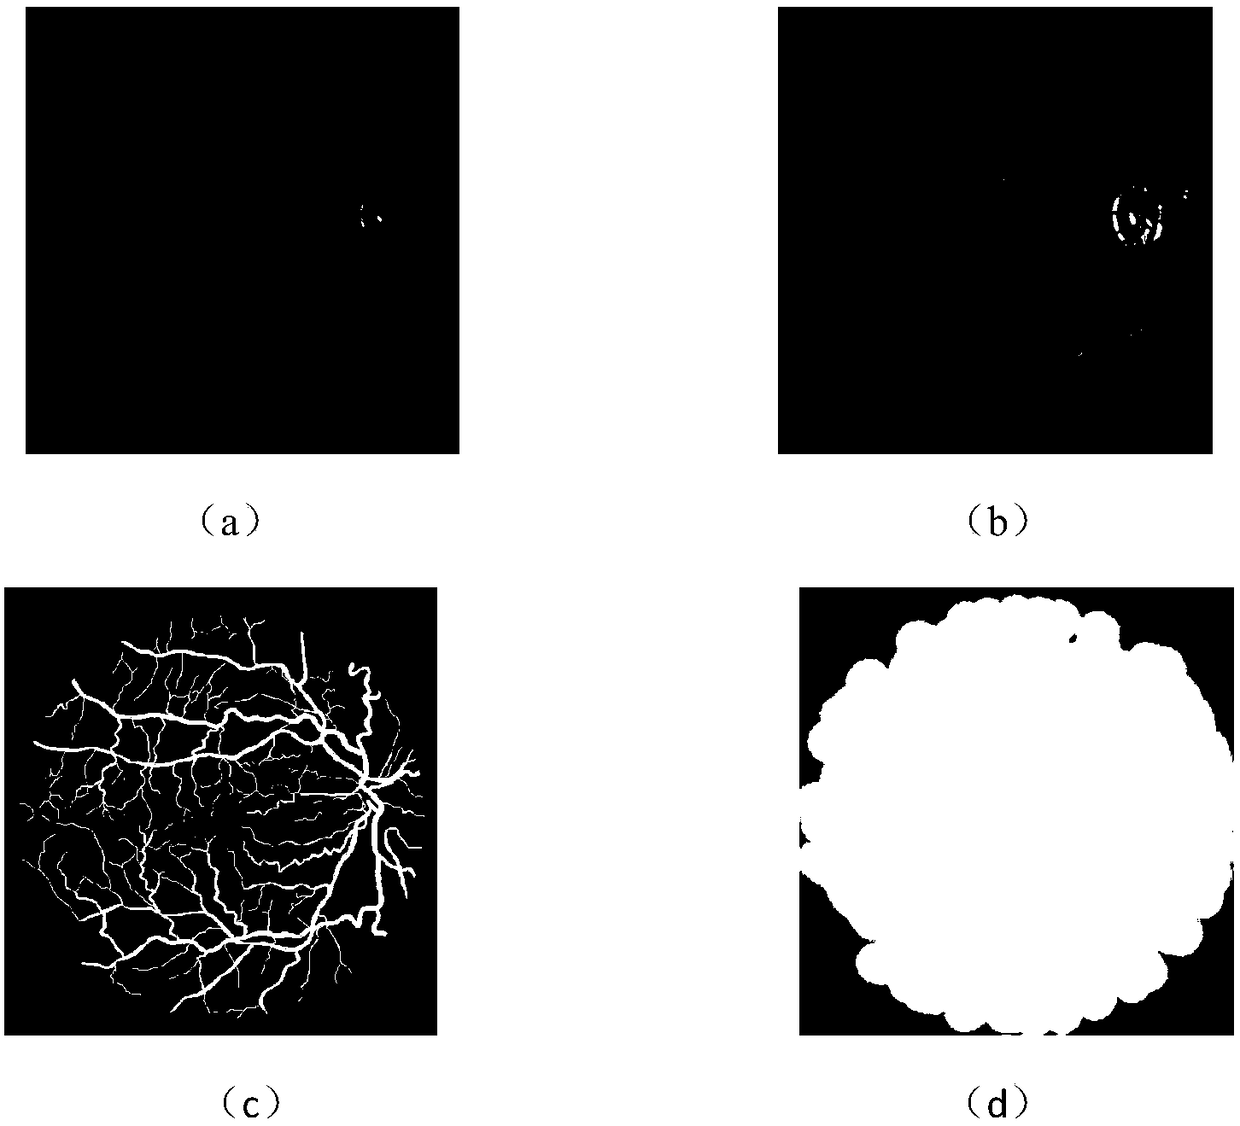 Iterative eye fundus image blood vessel segmentation method based on distance modulation loss